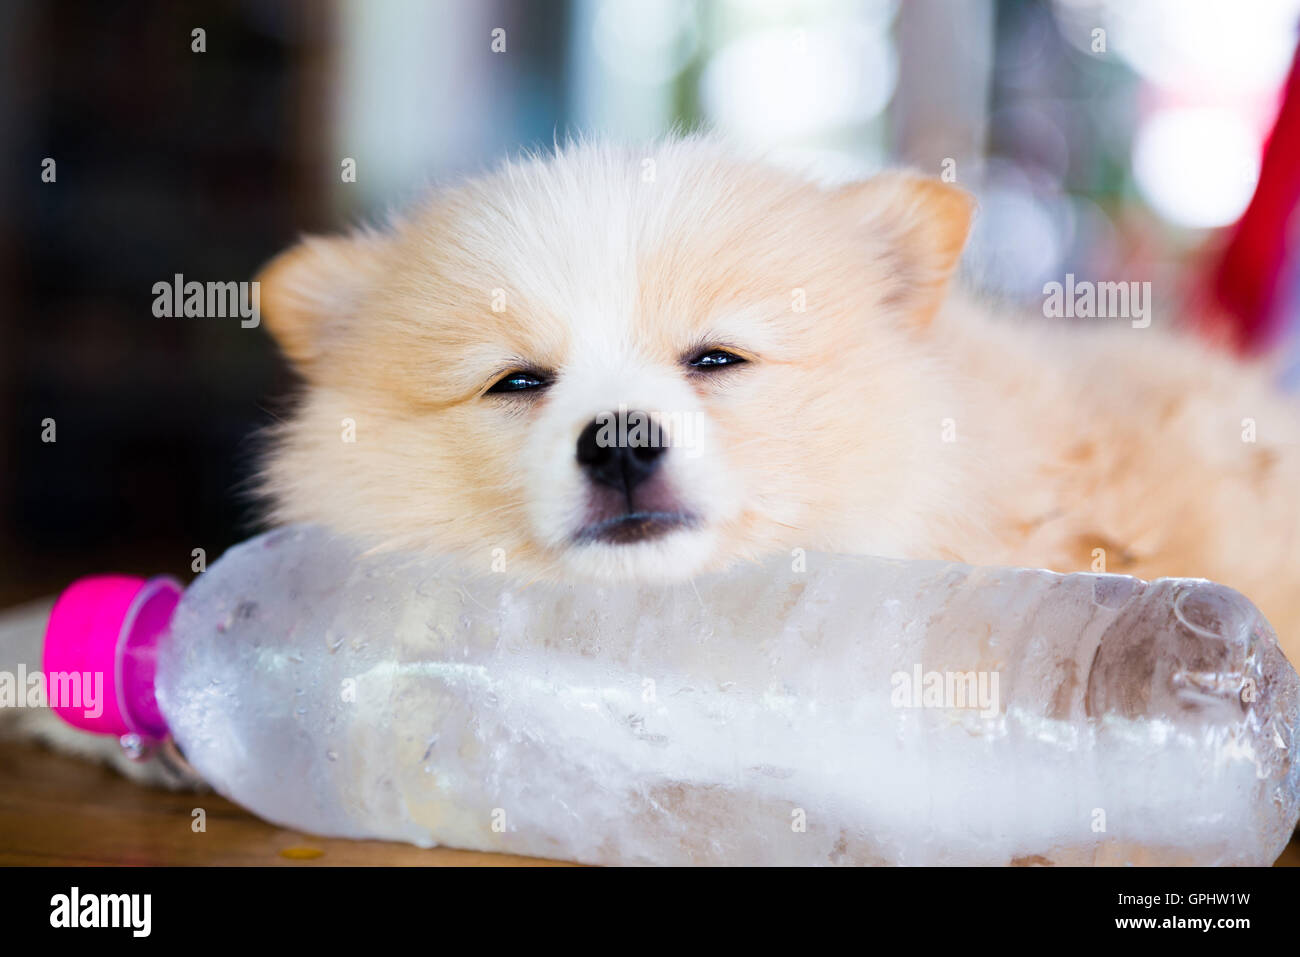 Brown Pomeranian Dog Sleeping On The Frozen Water Bottle Stock Photo Alamy